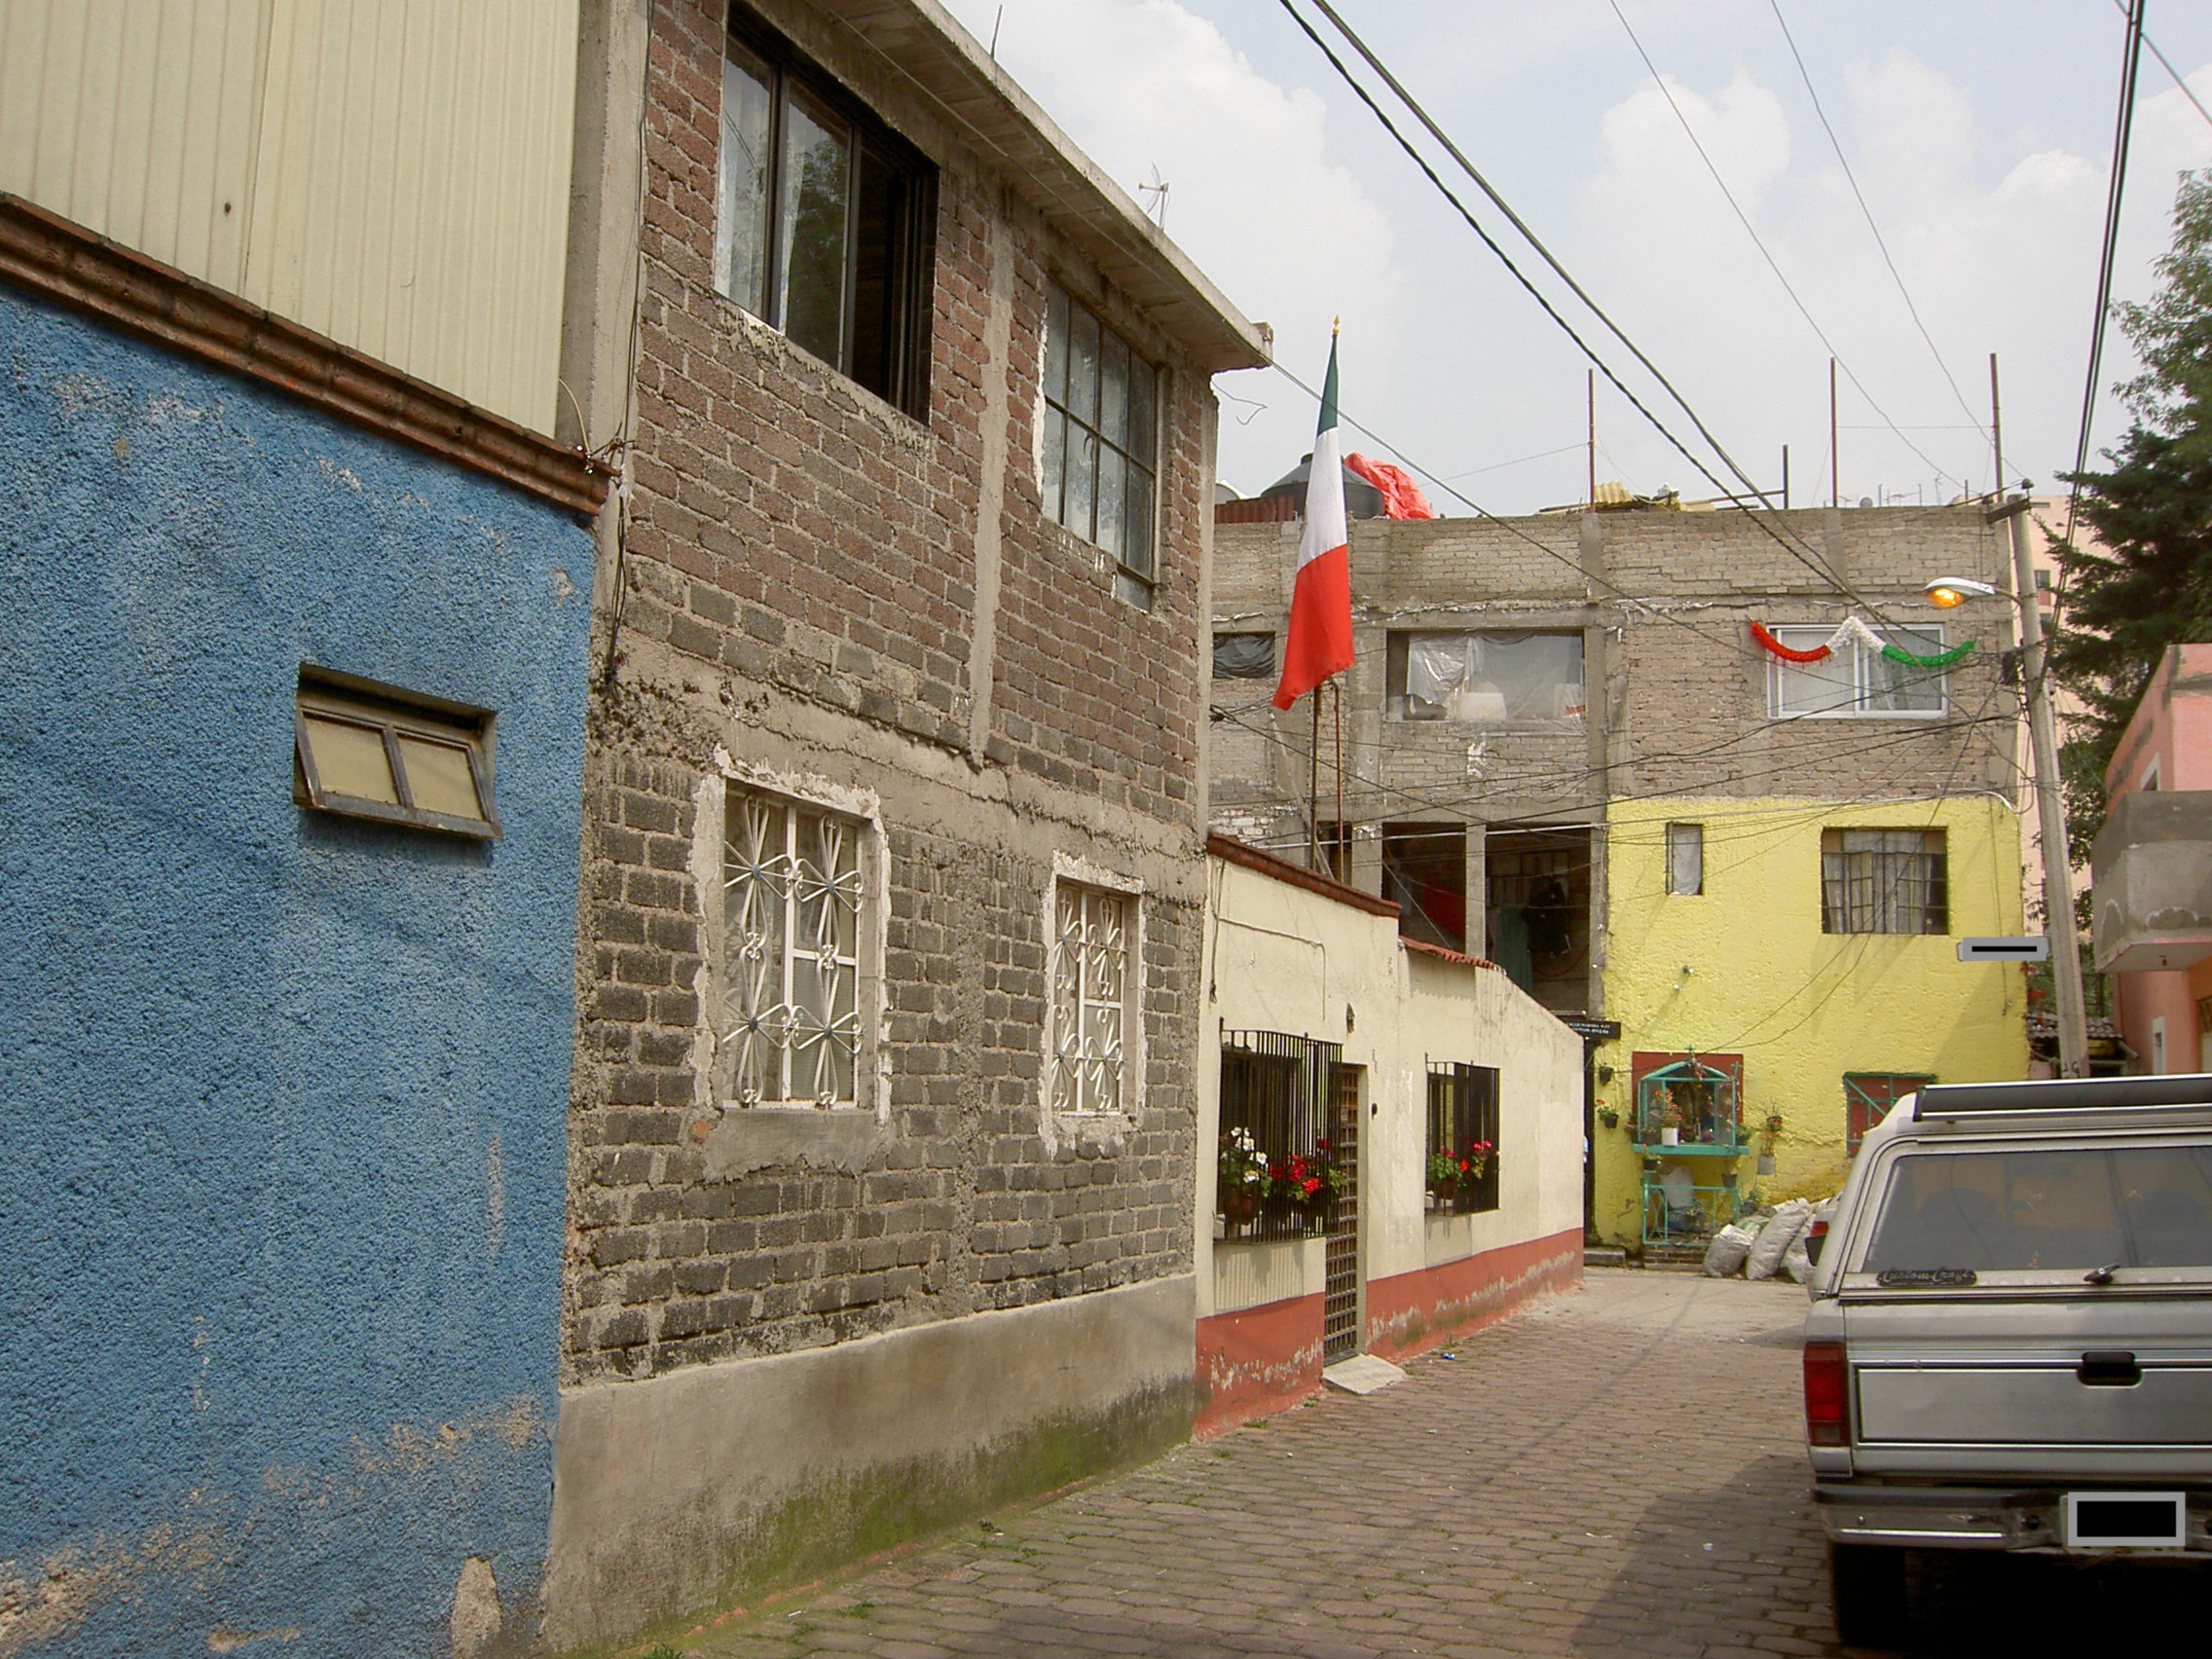 a neighborhood in Mexico City